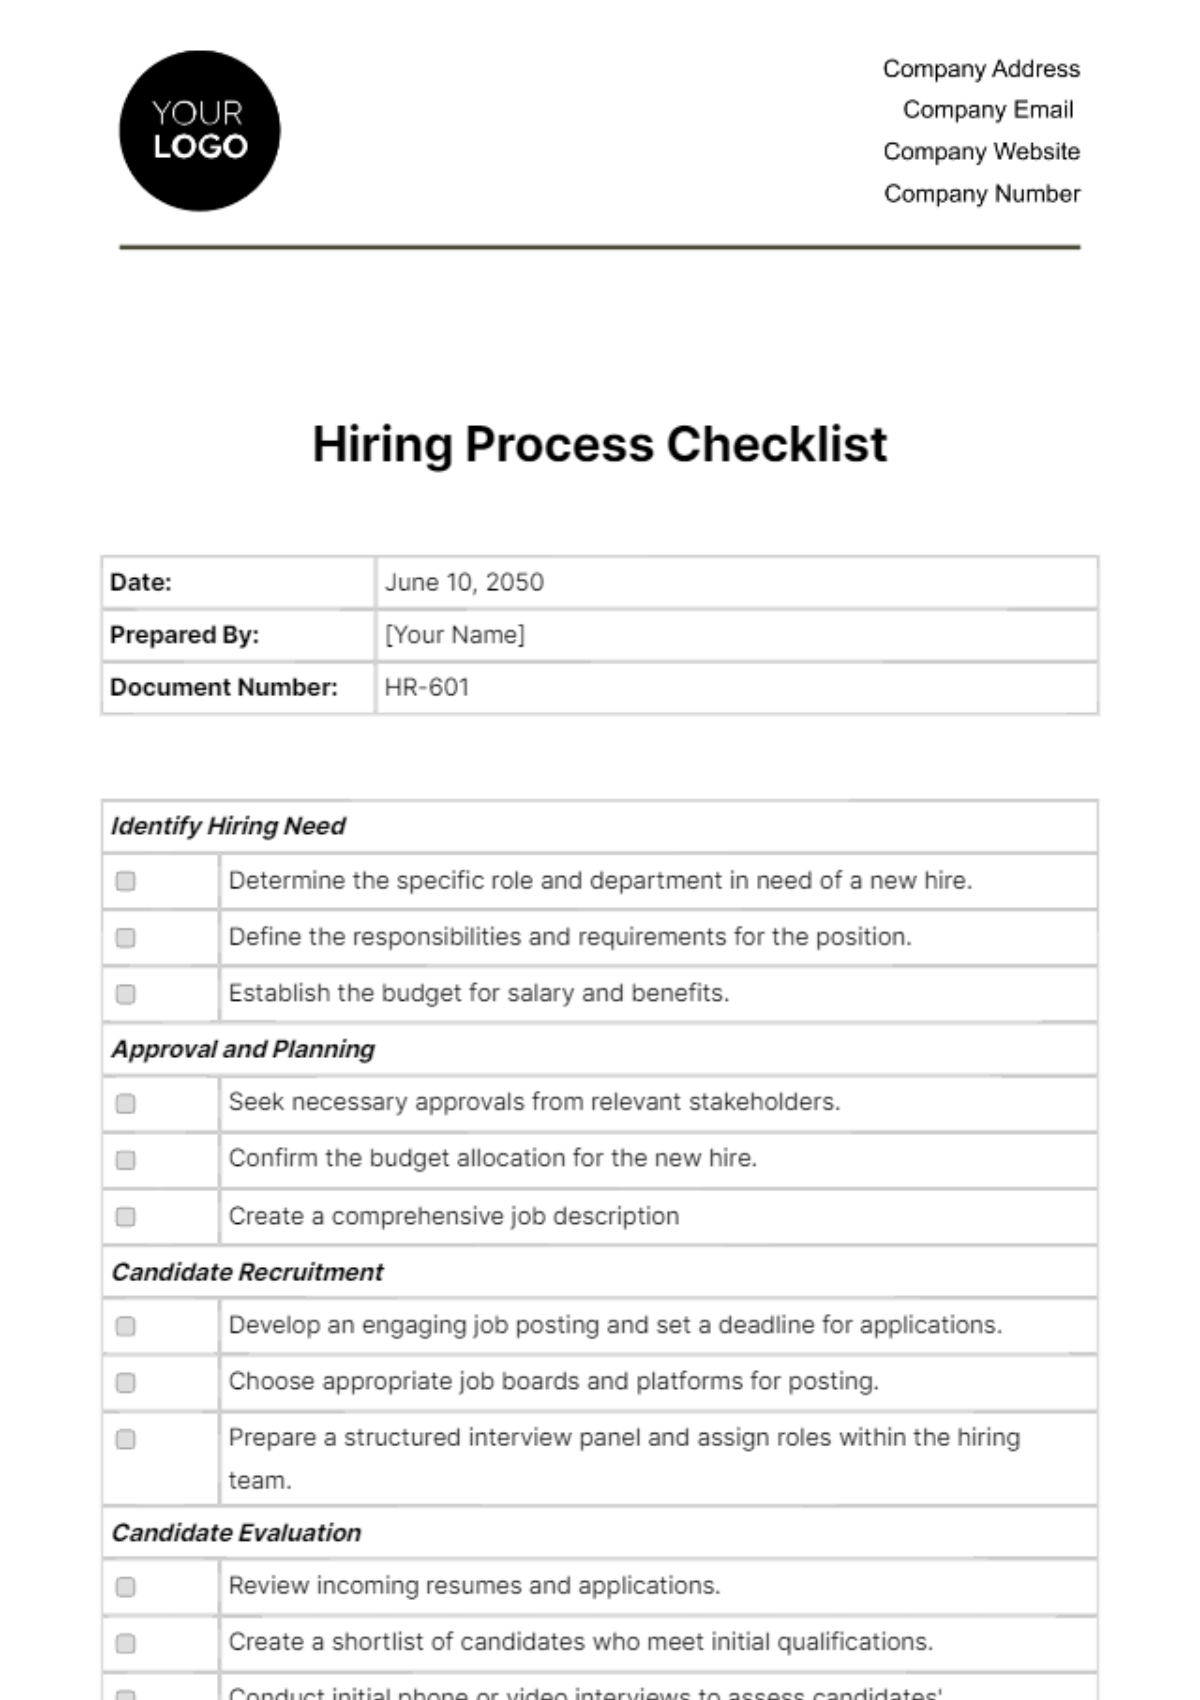 Free Hiring Process Checklist HR Template